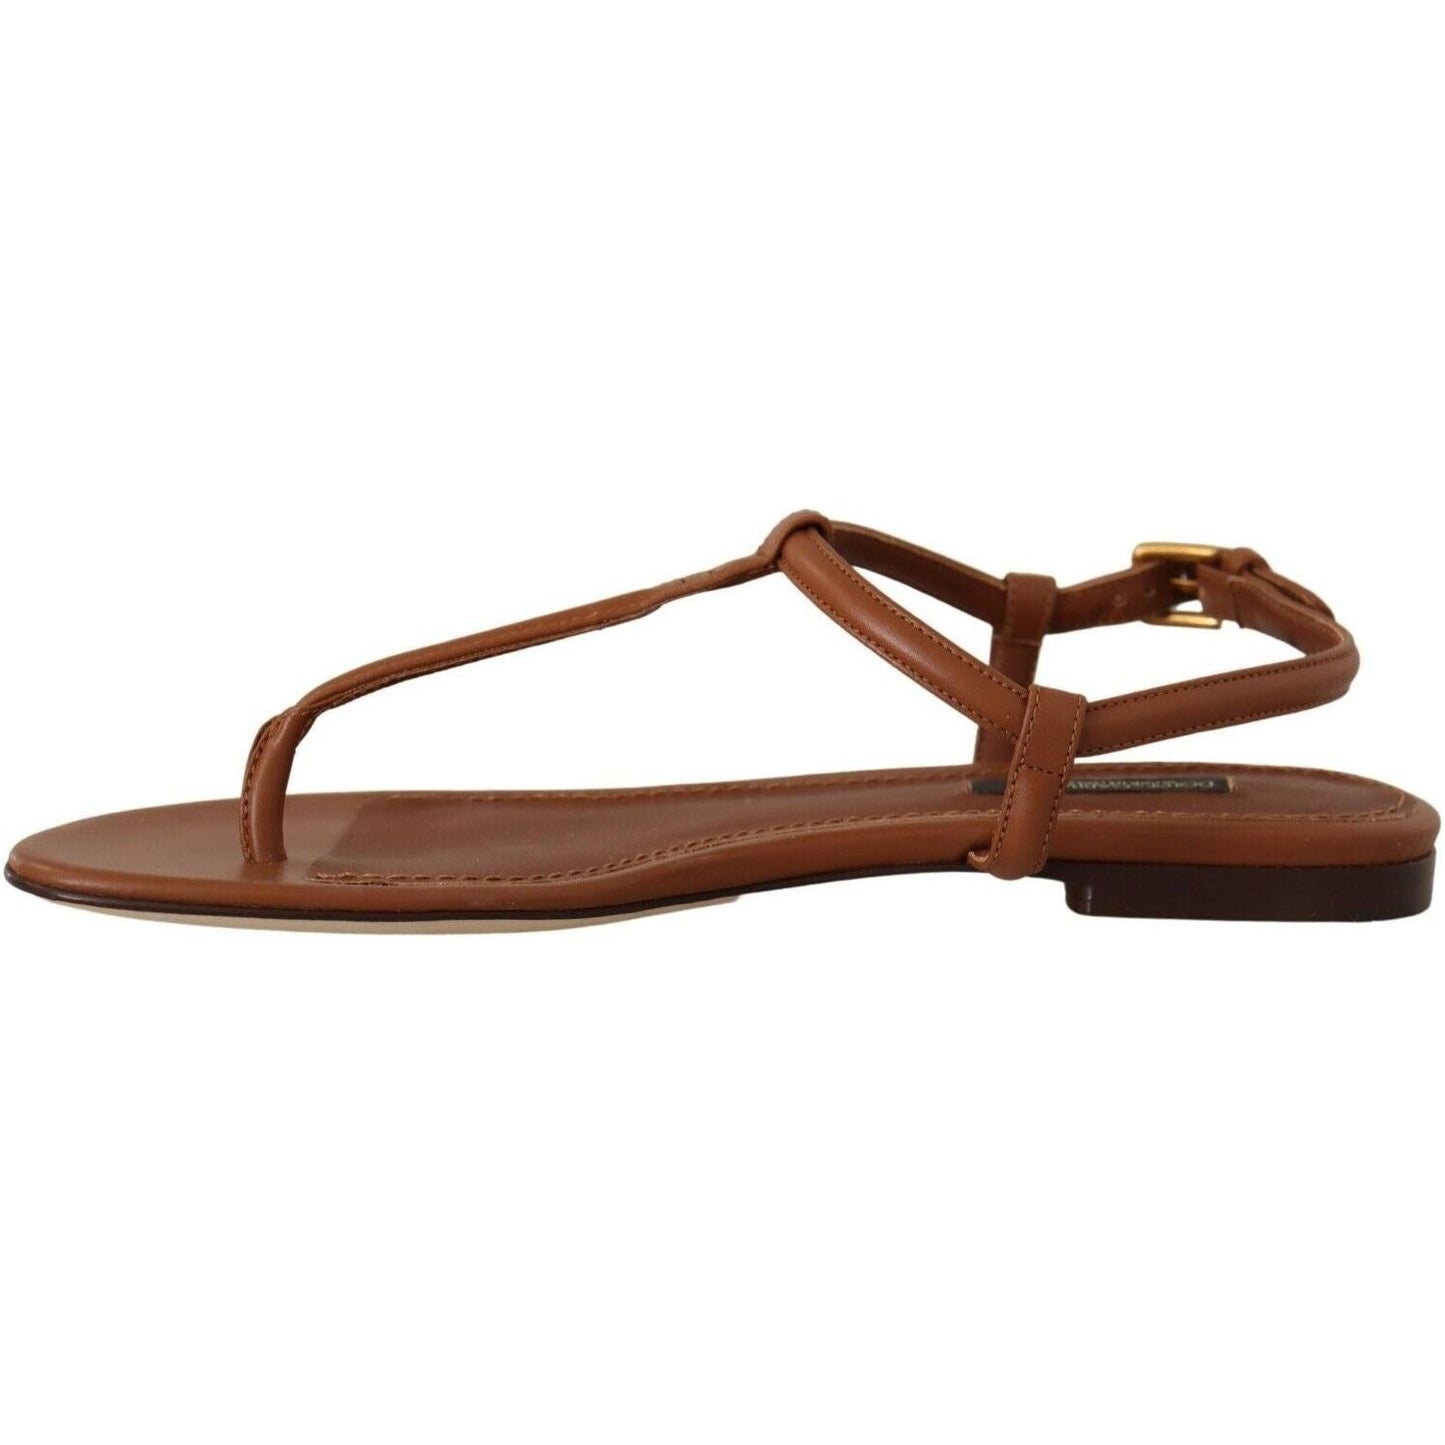 Dolce & Gabbana Elegant Leather T-Strap Flat Sandals brown-leather-t-strap-slides-flats-sandals-shoes s-l1600-39-16-c3a6a7aa-5f1.jpg